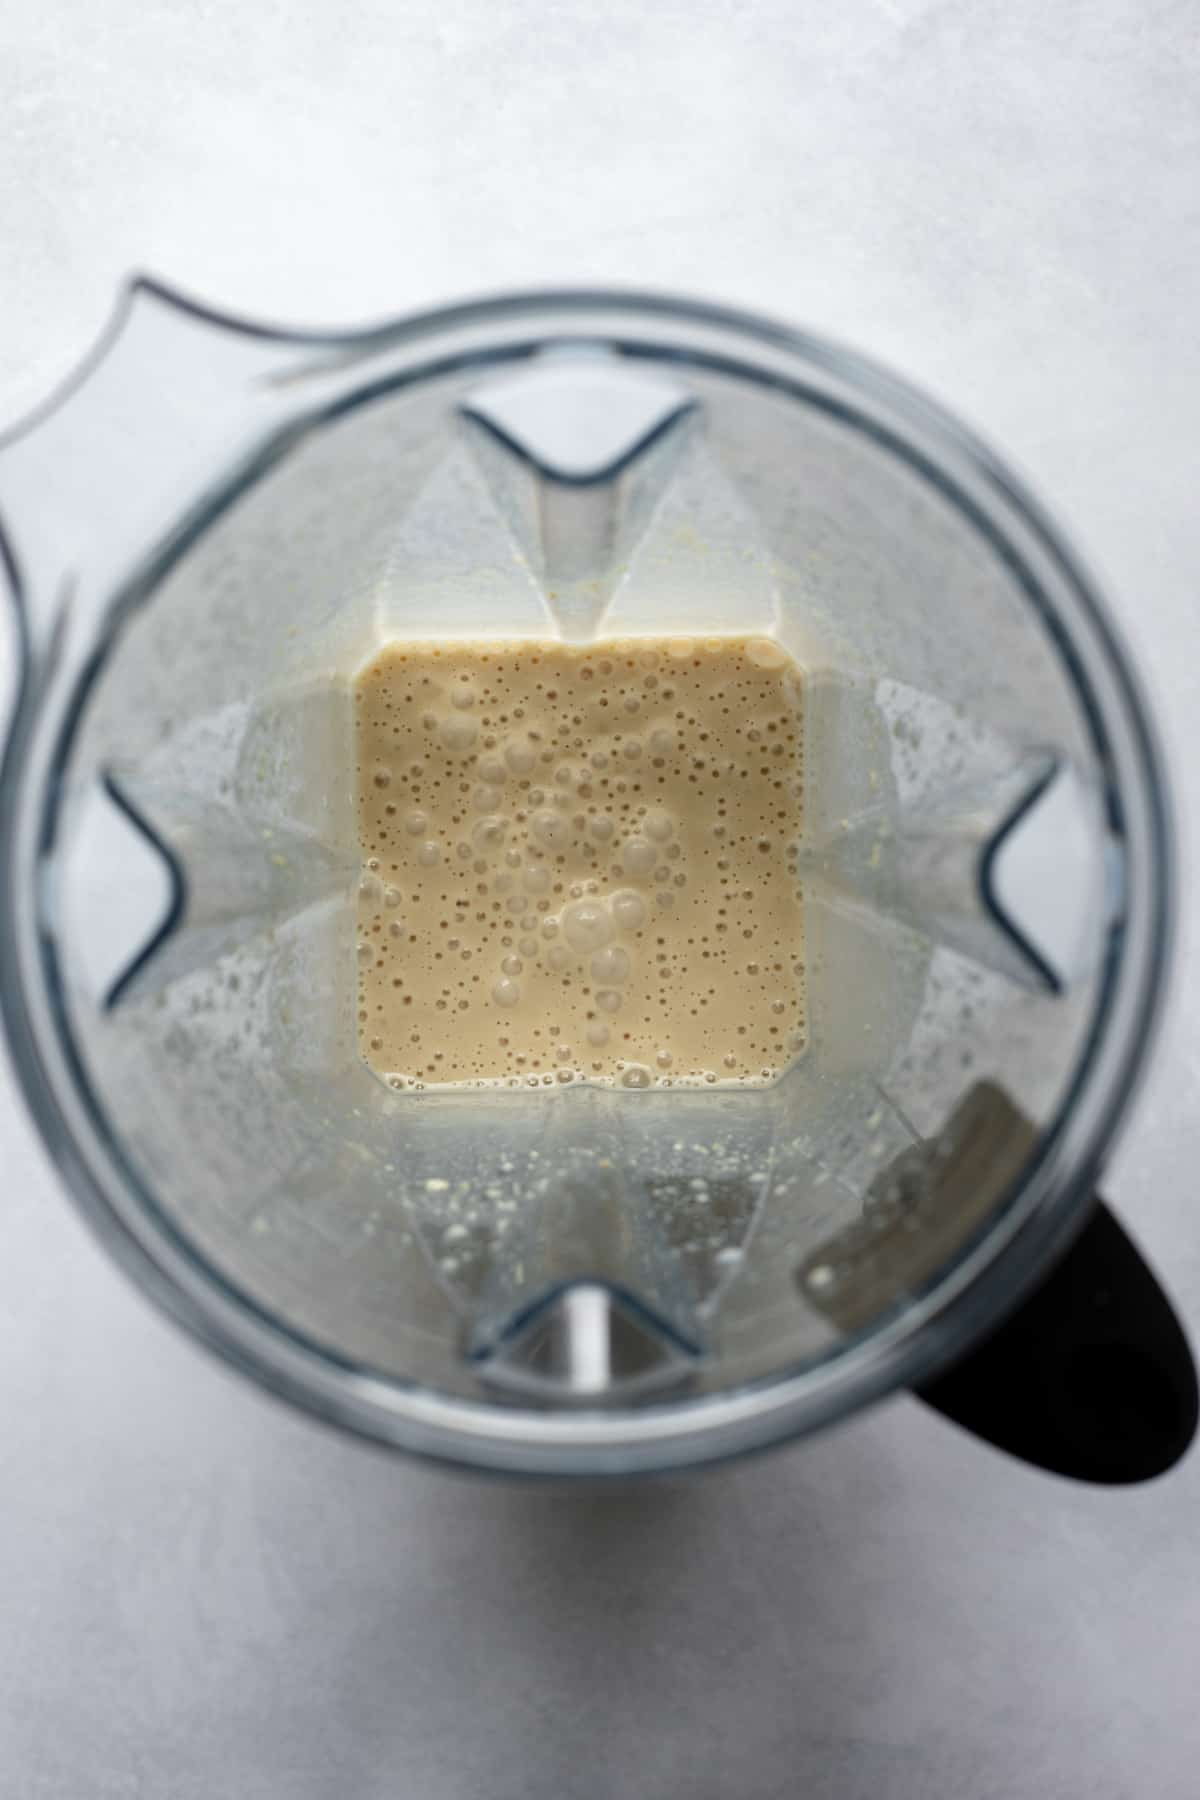 sweetened cashew milk inside a blender.